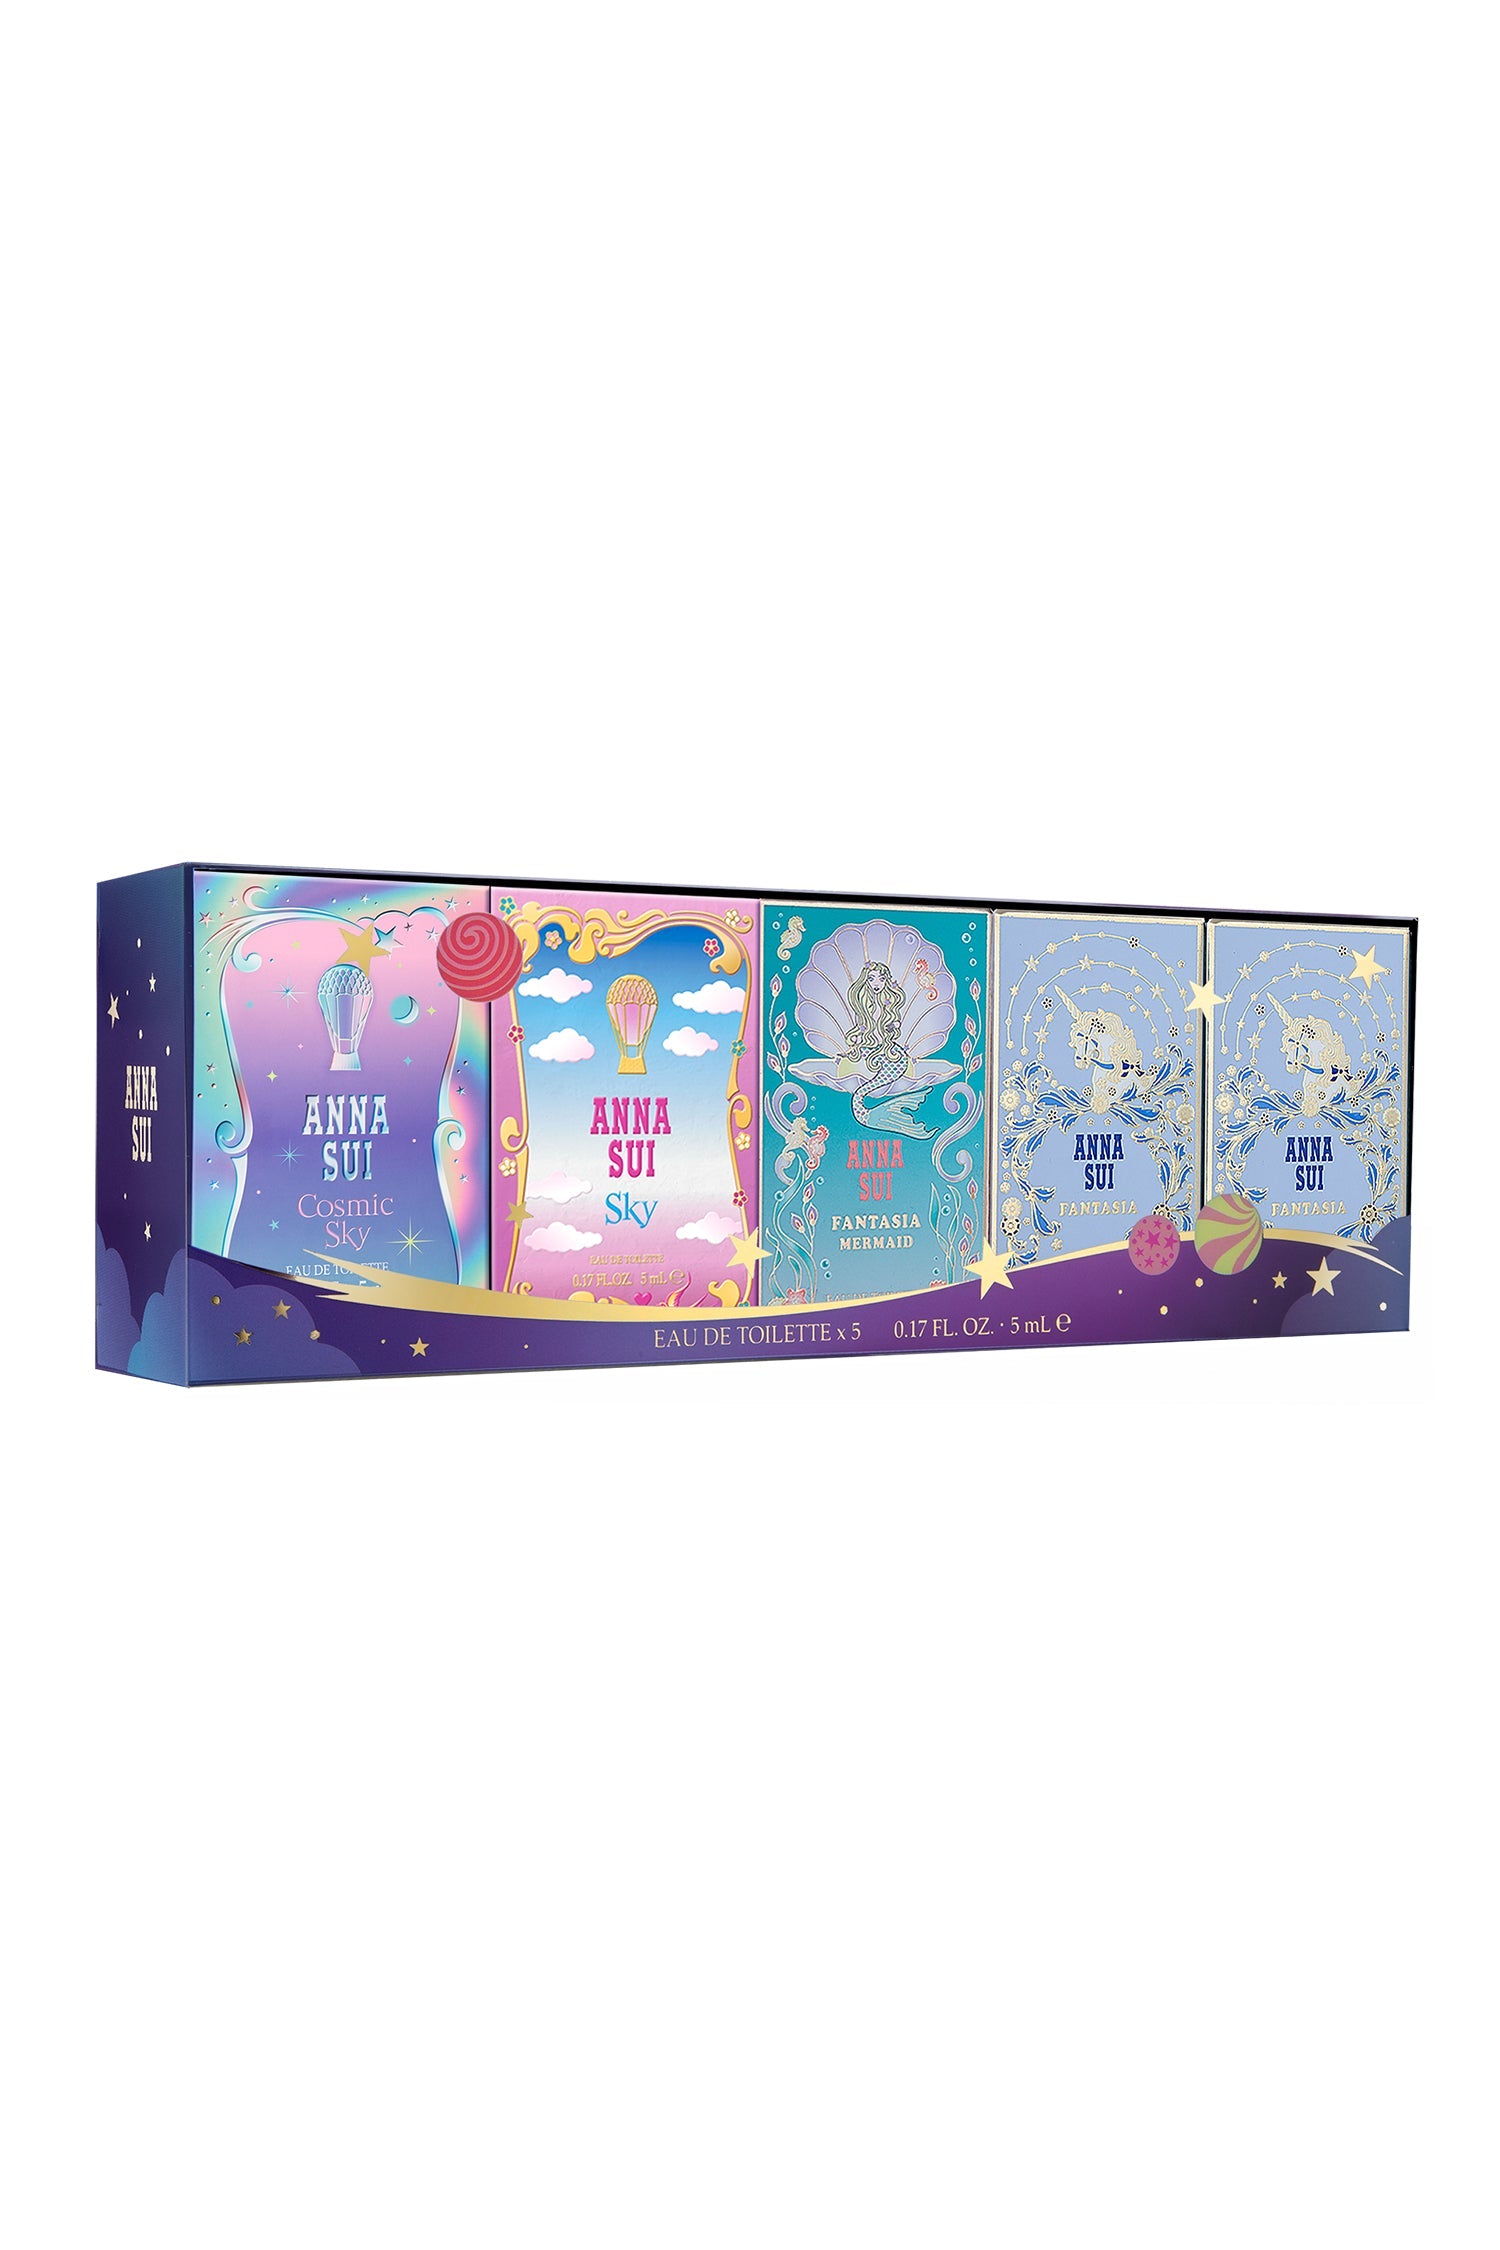 Fragrance Mini Set: new fragrances Cosmic Sky, Sky, Fantasia Mermaid, and Fantasia 2 units